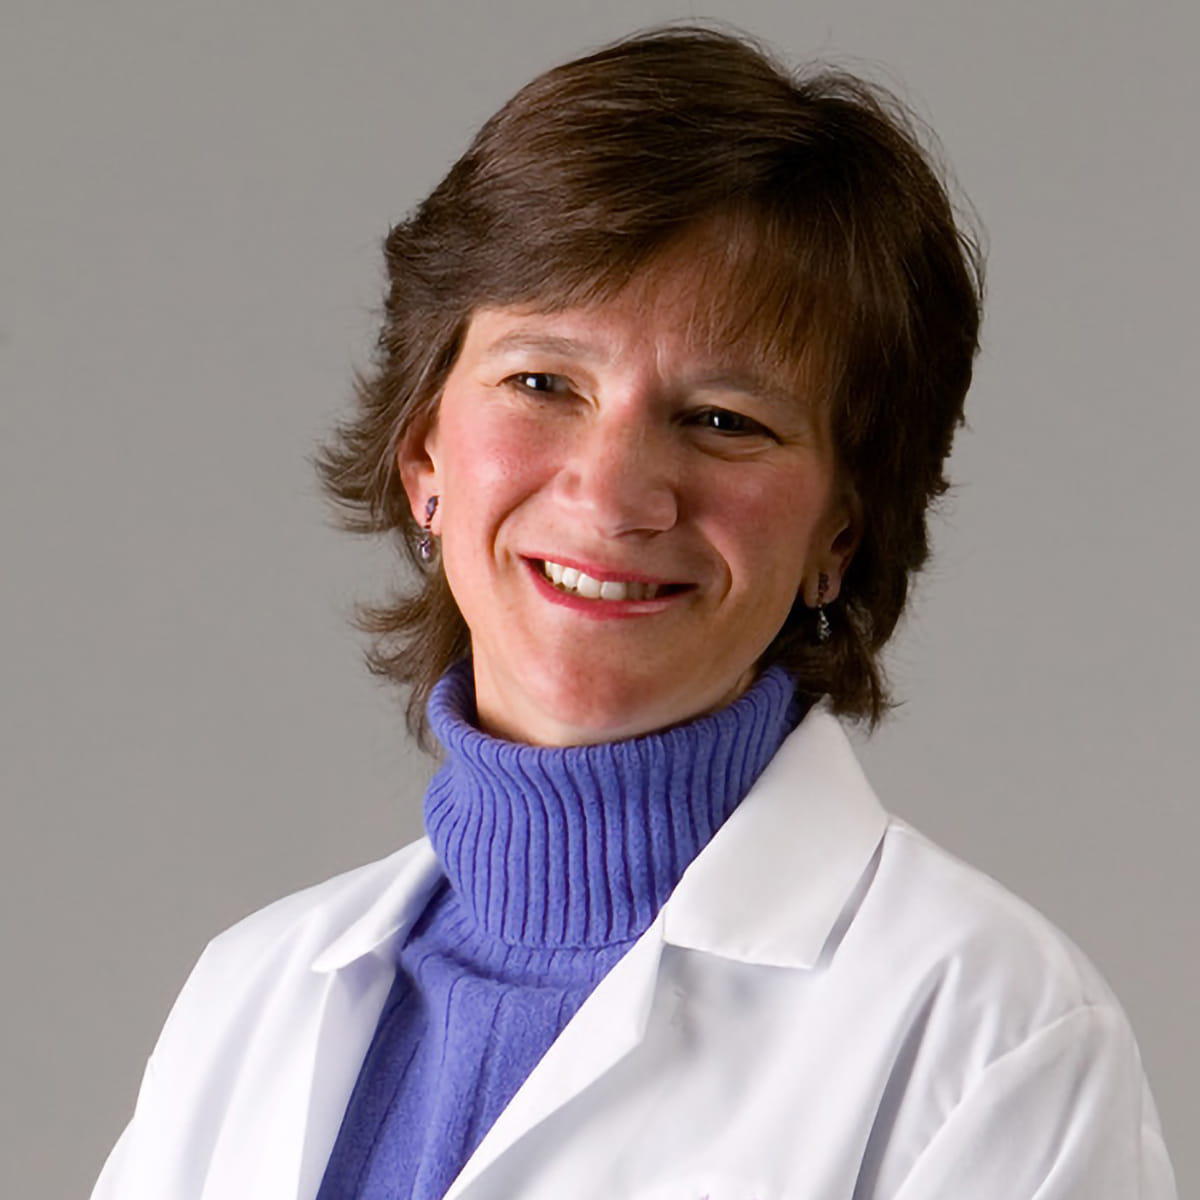 Dr. Amy Bishop Kewin